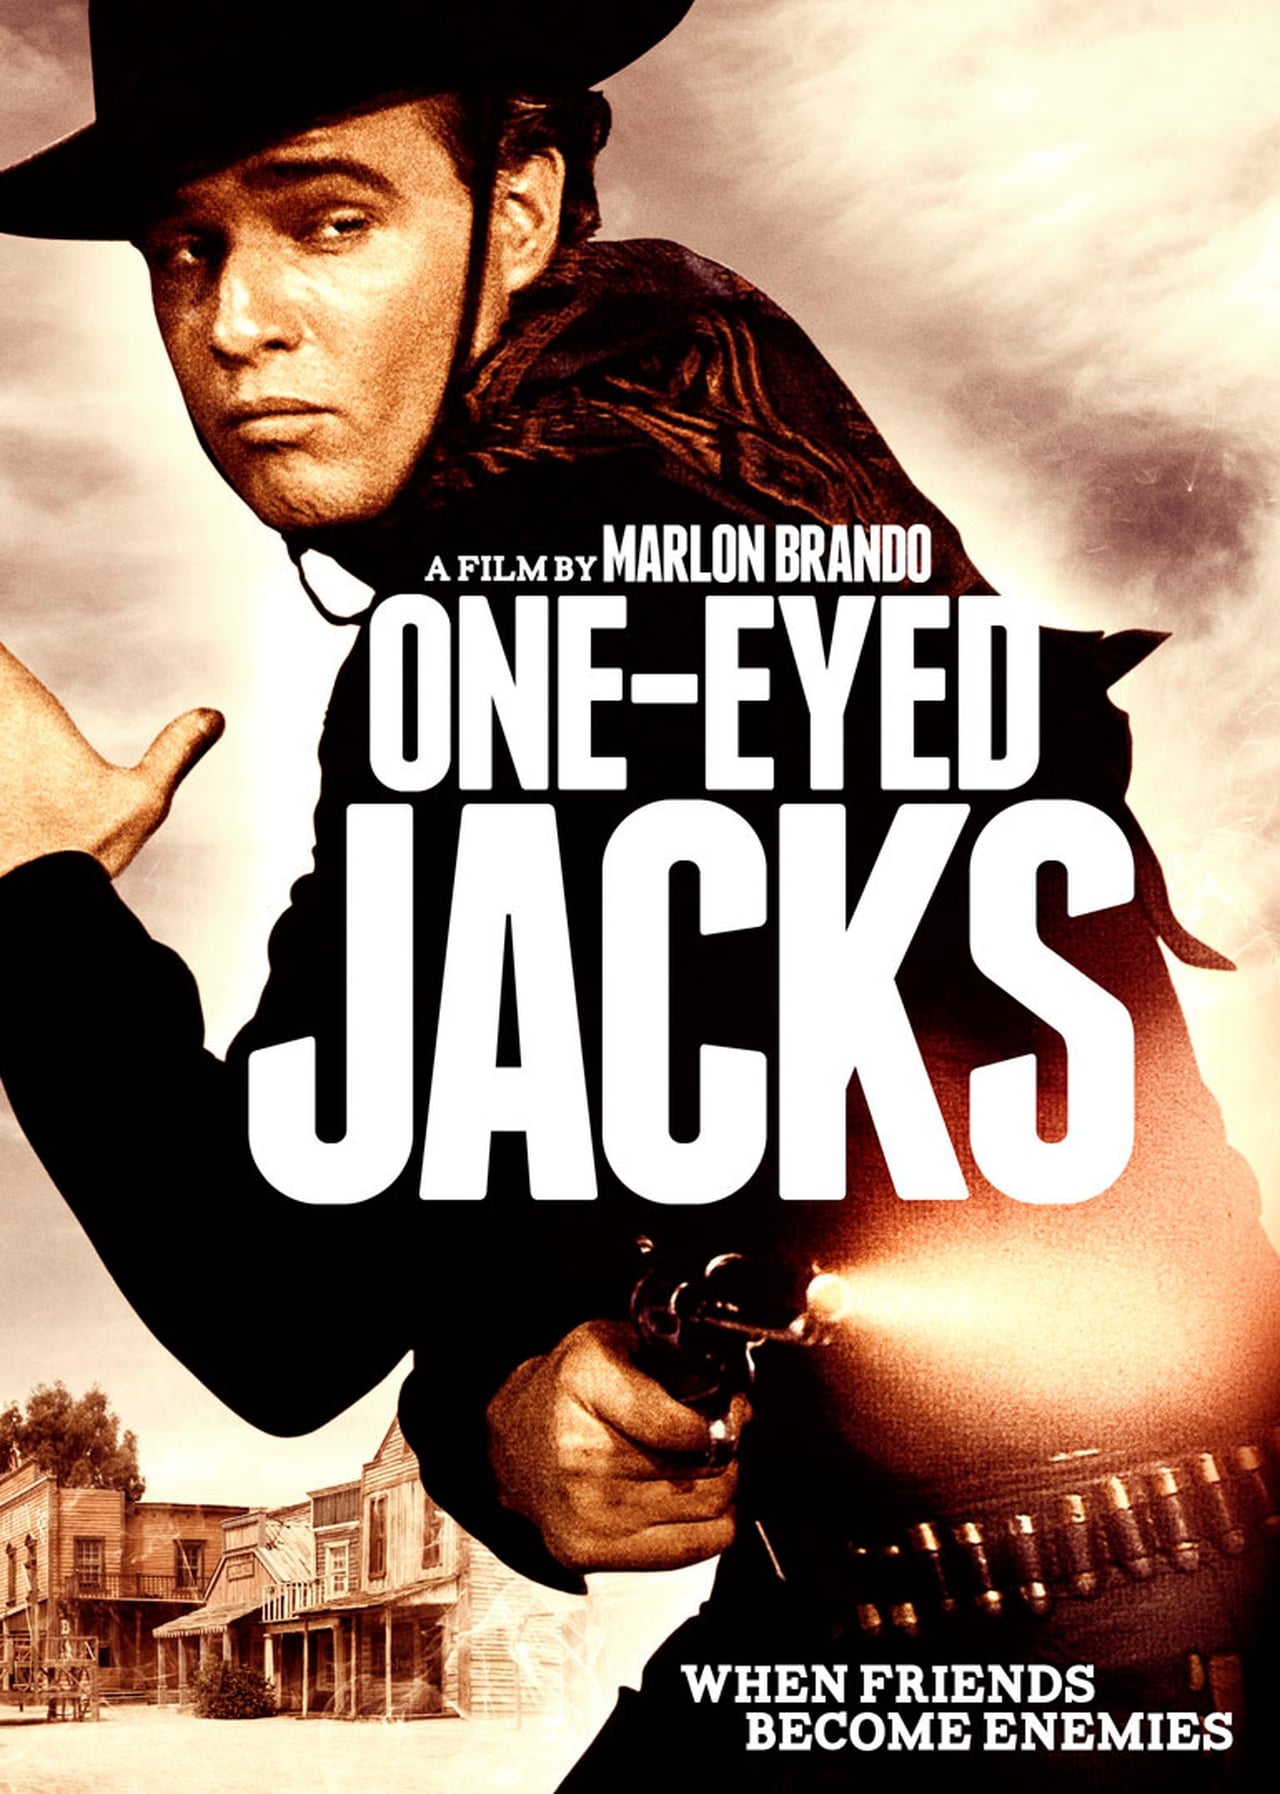 EN - One Eyed Jacks (1961) - MARLON BRANDO